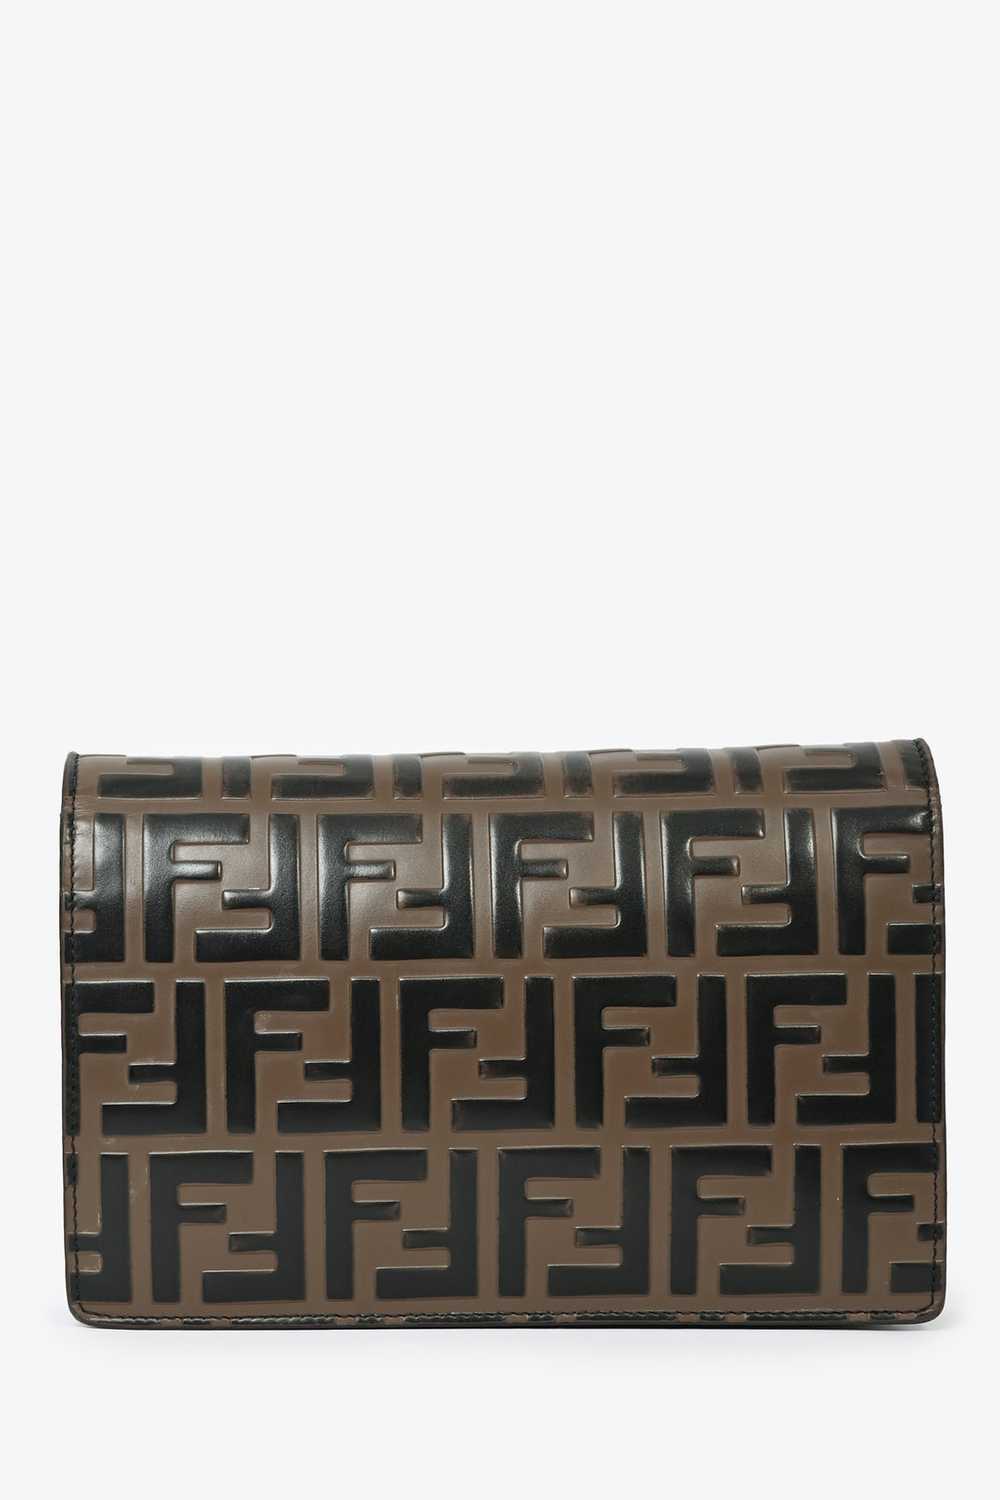 Fendi Black/Brown FF Monogram Wallet On Chain - image 3